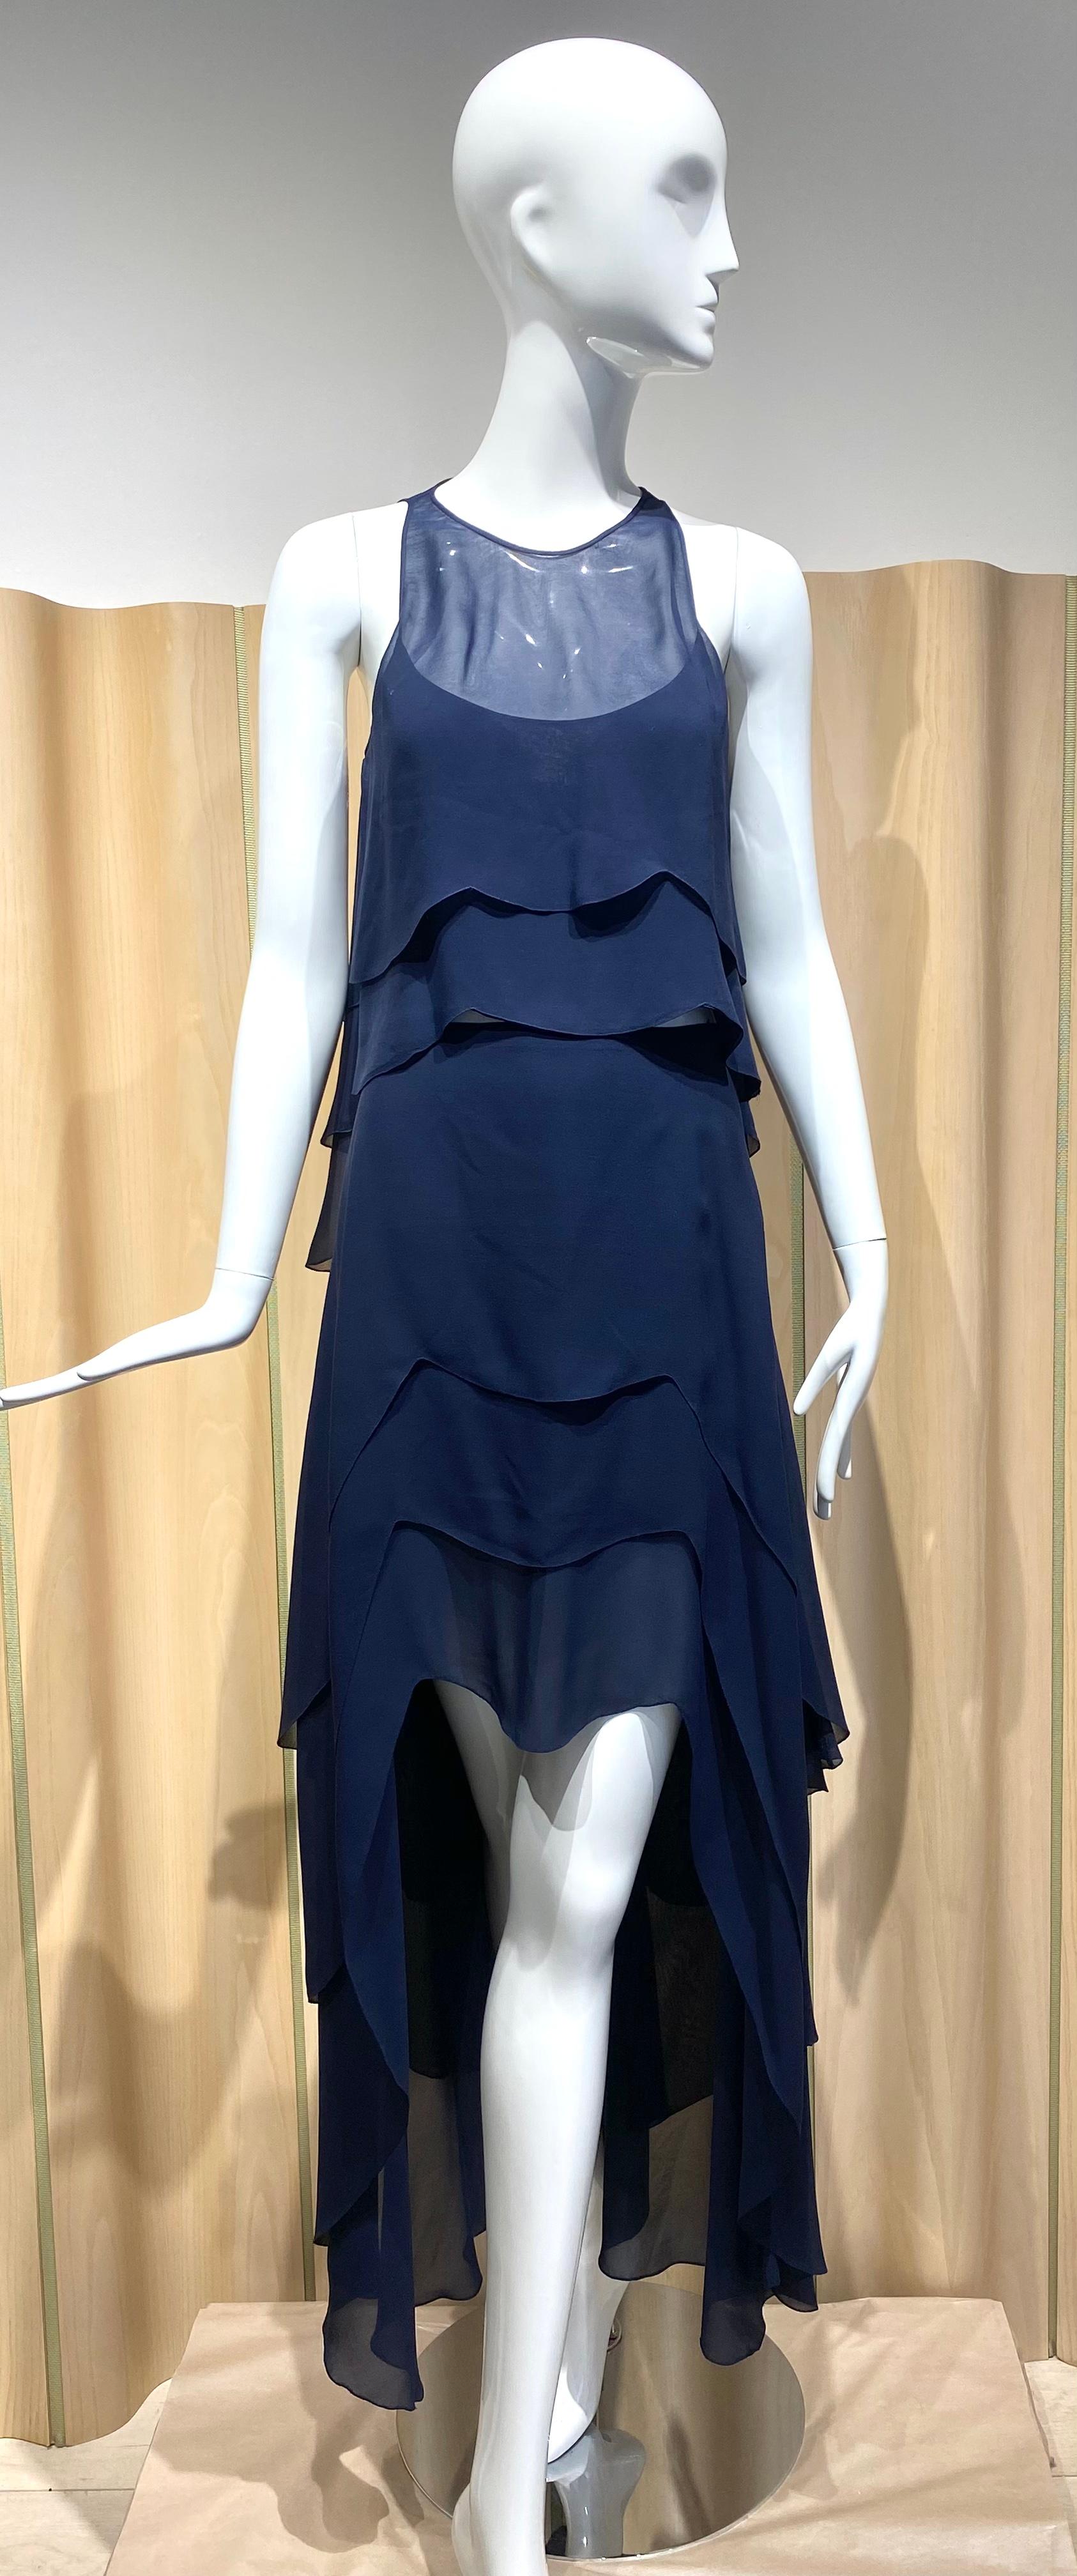 90s Karl Lagerfeld Navy Blue Silk chiffon sleeveless blouse and maxi skirt set. Skirt hem shorter than the back hem.
size 6
Measurement:
Top : B 36” / W 38”/ Length 27”
Skirt waist 27” / Hip 42”/ Front length hem 19.5”
Back hem length : 19.5
